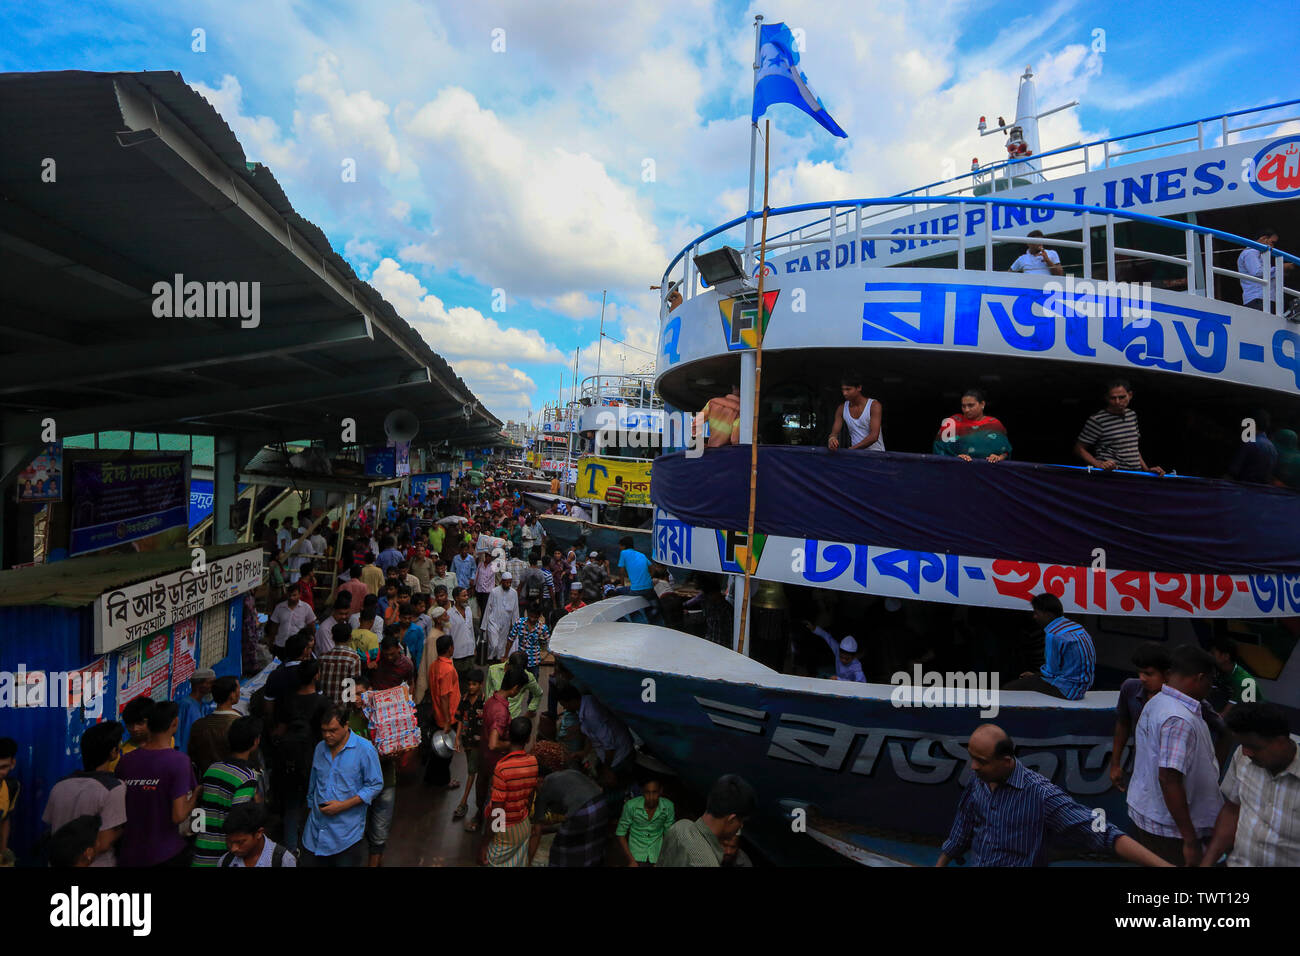 Sadarghat launch terminal in Dhaka flooded with homebound people ahead of Eid-ul-Fitr festival. Dhaka, Bangladesh. Stock Photo